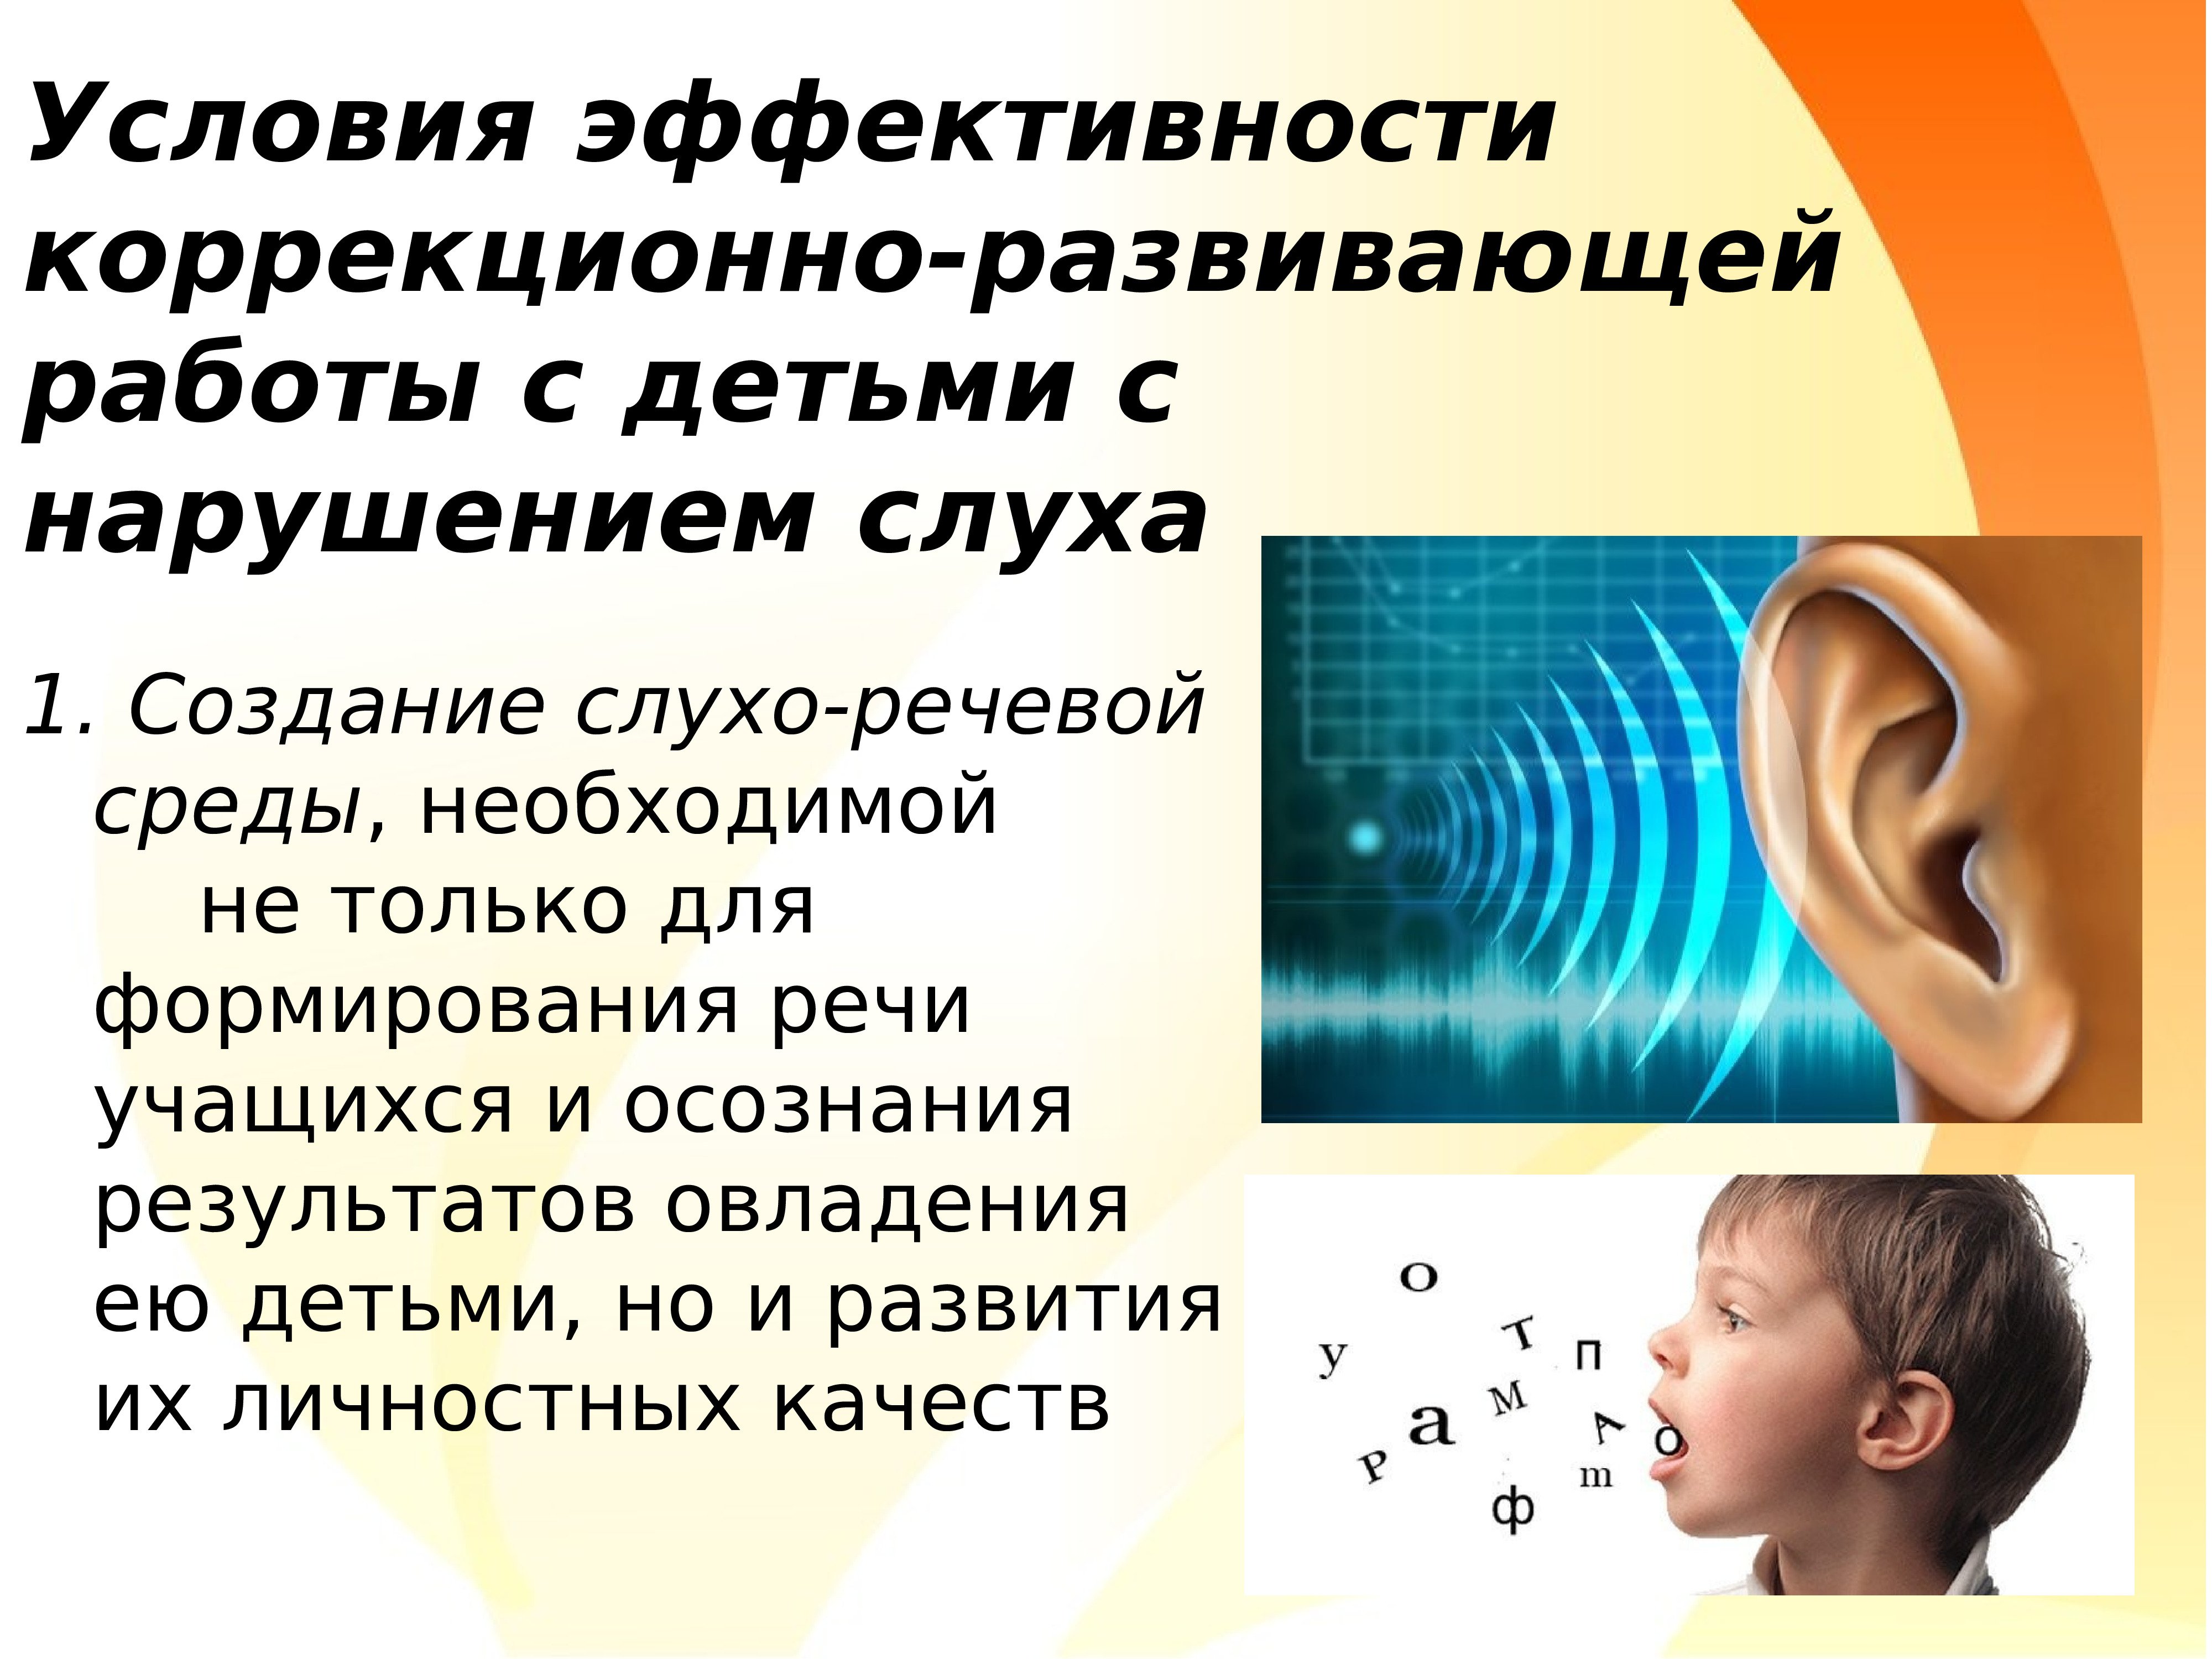 Коррекция детей с нарушениями слуха. Технологии для детей с нарушением слуха. Задачи для детей с нарушением слуха. Дети с нарушением слуха презентация. Методы коррекции детей с нарушением слуха.